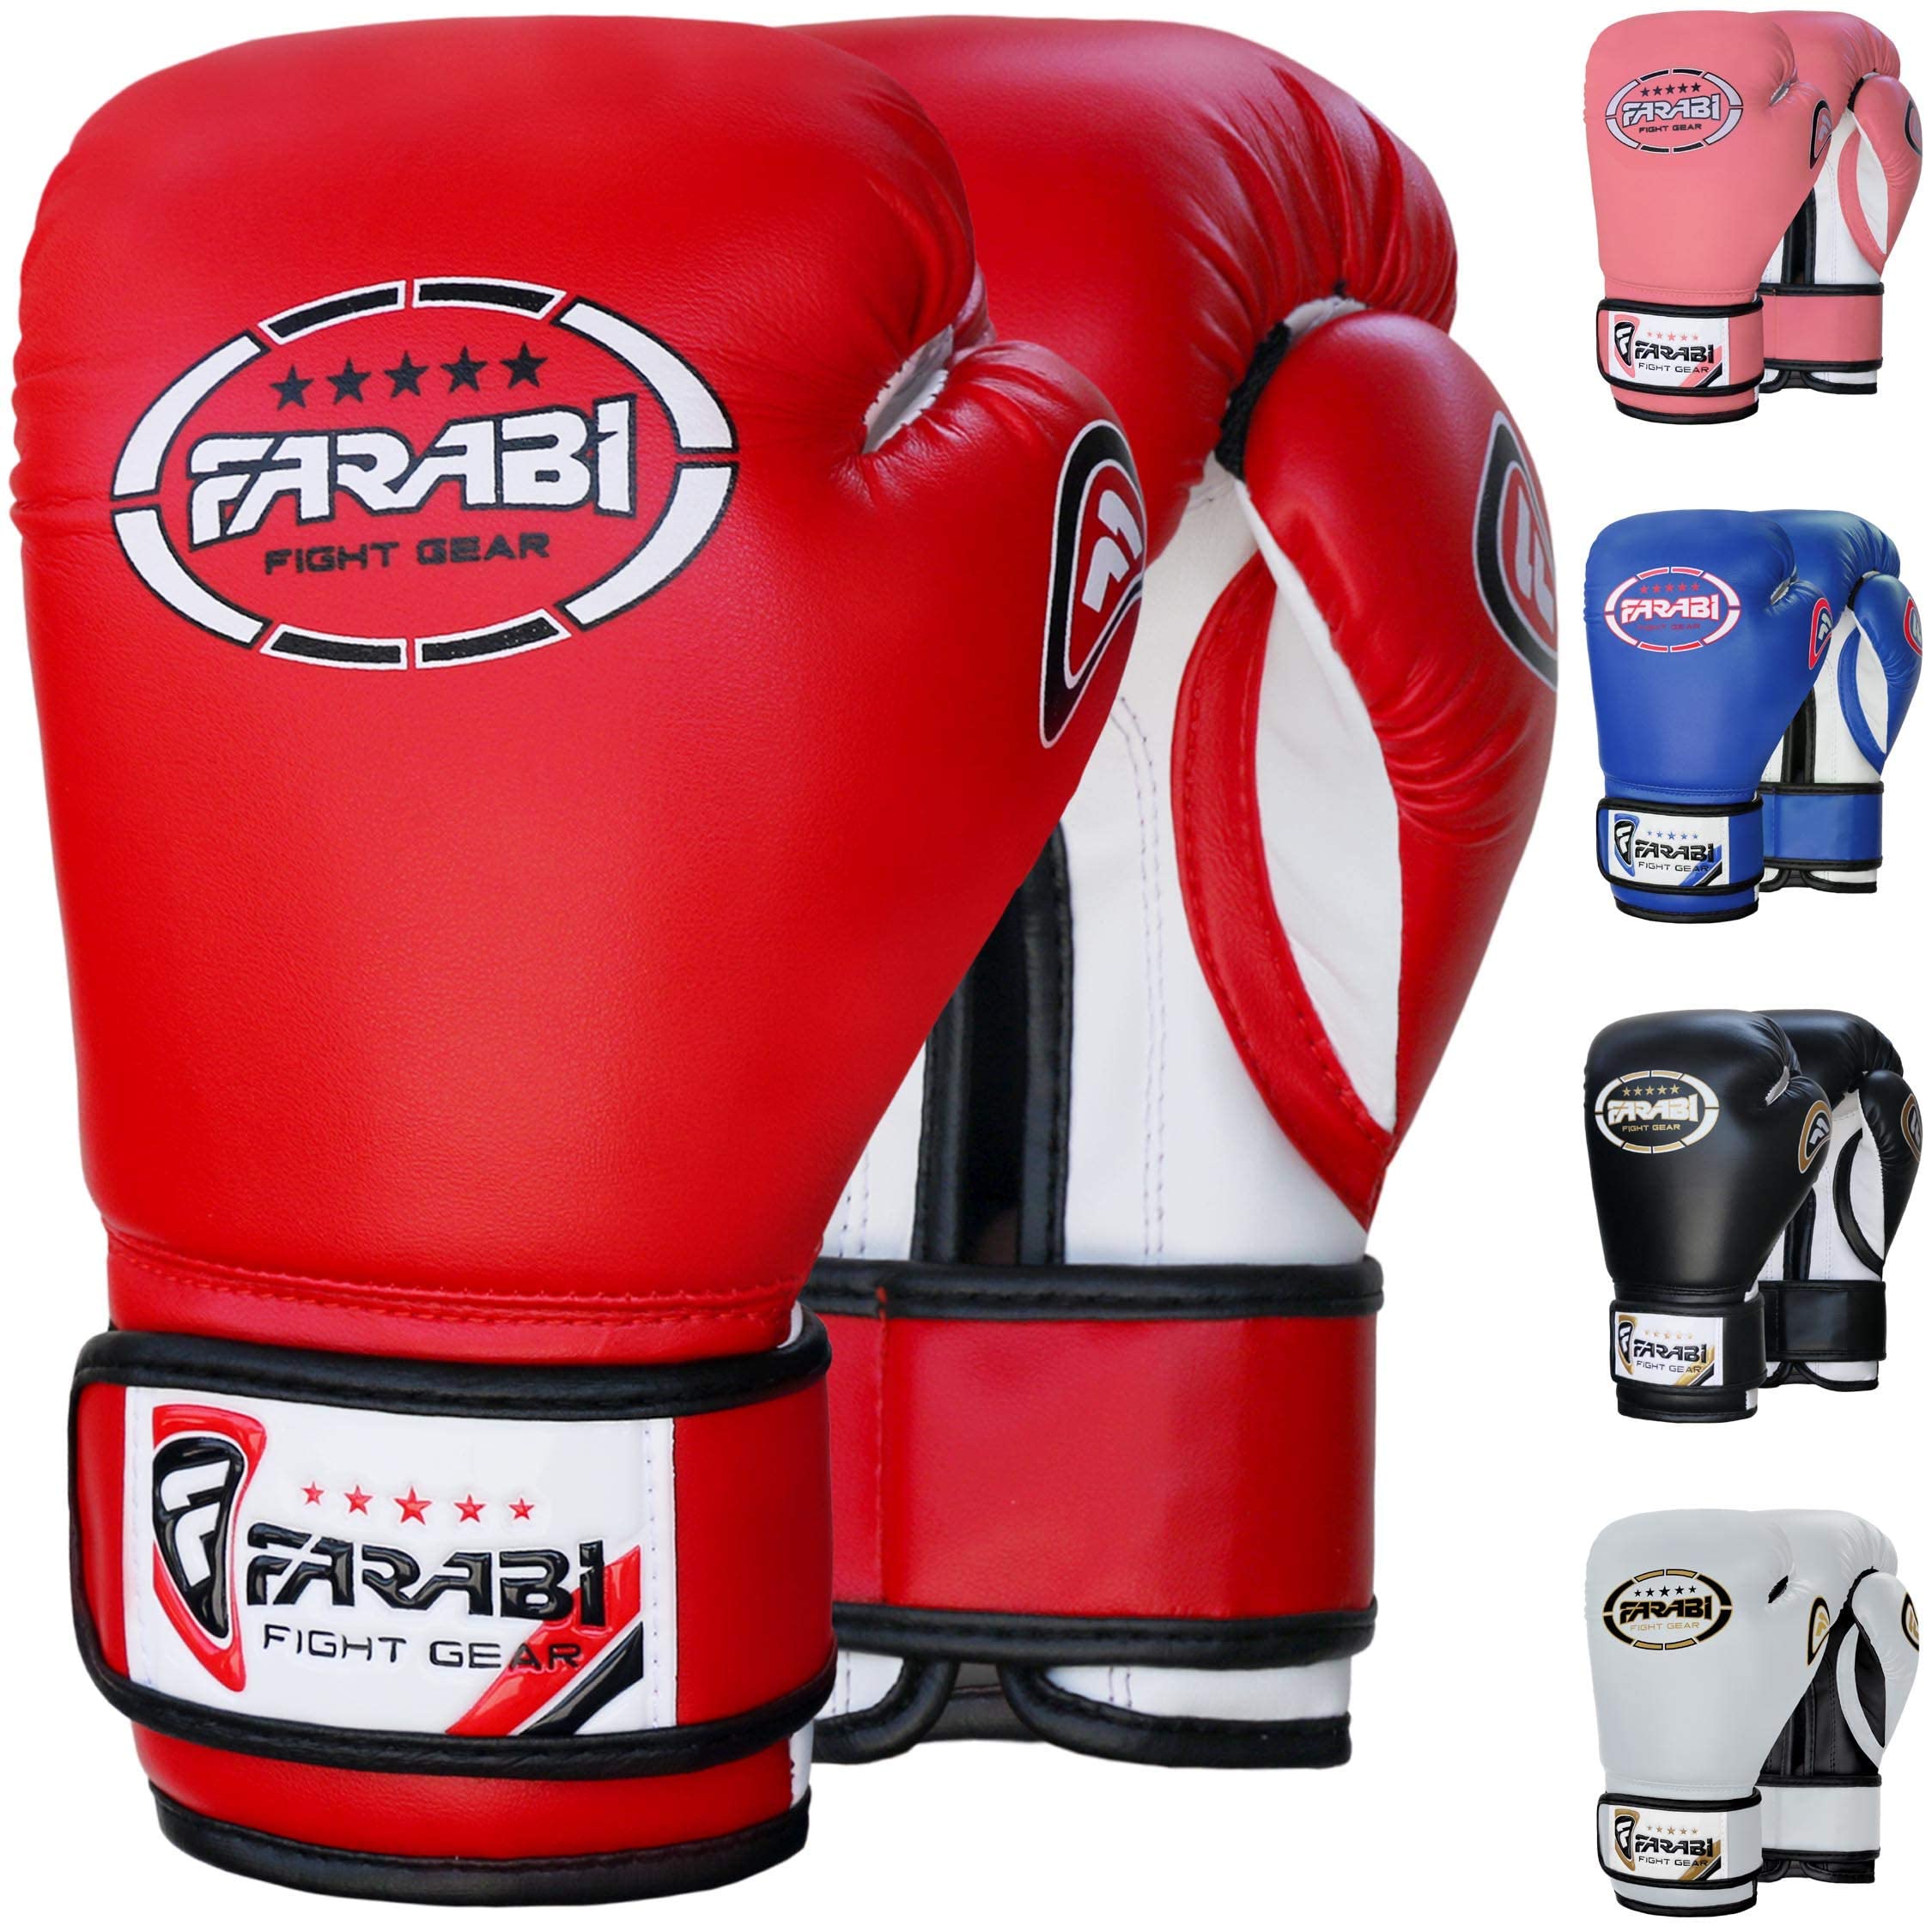 Farabi Sports 4 oz 6 oz 8 oz Boxhandschuhe Kinder Box Handschuhe MMA Muay Thai Kickboxen Sparring Boxsack Training Kinder Boxhandschuhe (Red, 8-oz)